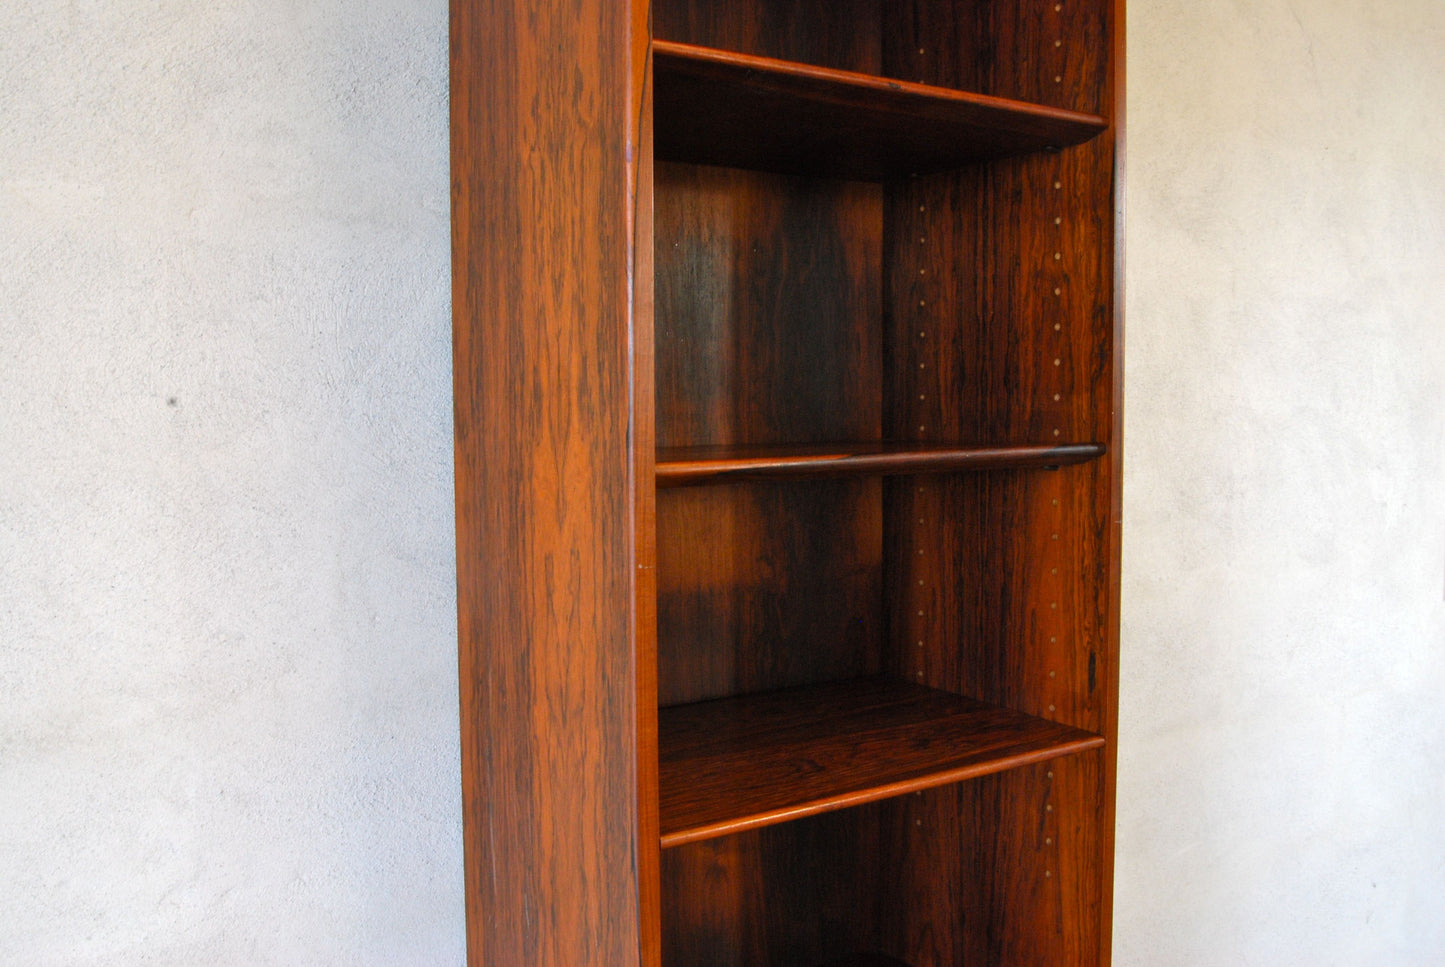 Narrow rosewood bookshelf